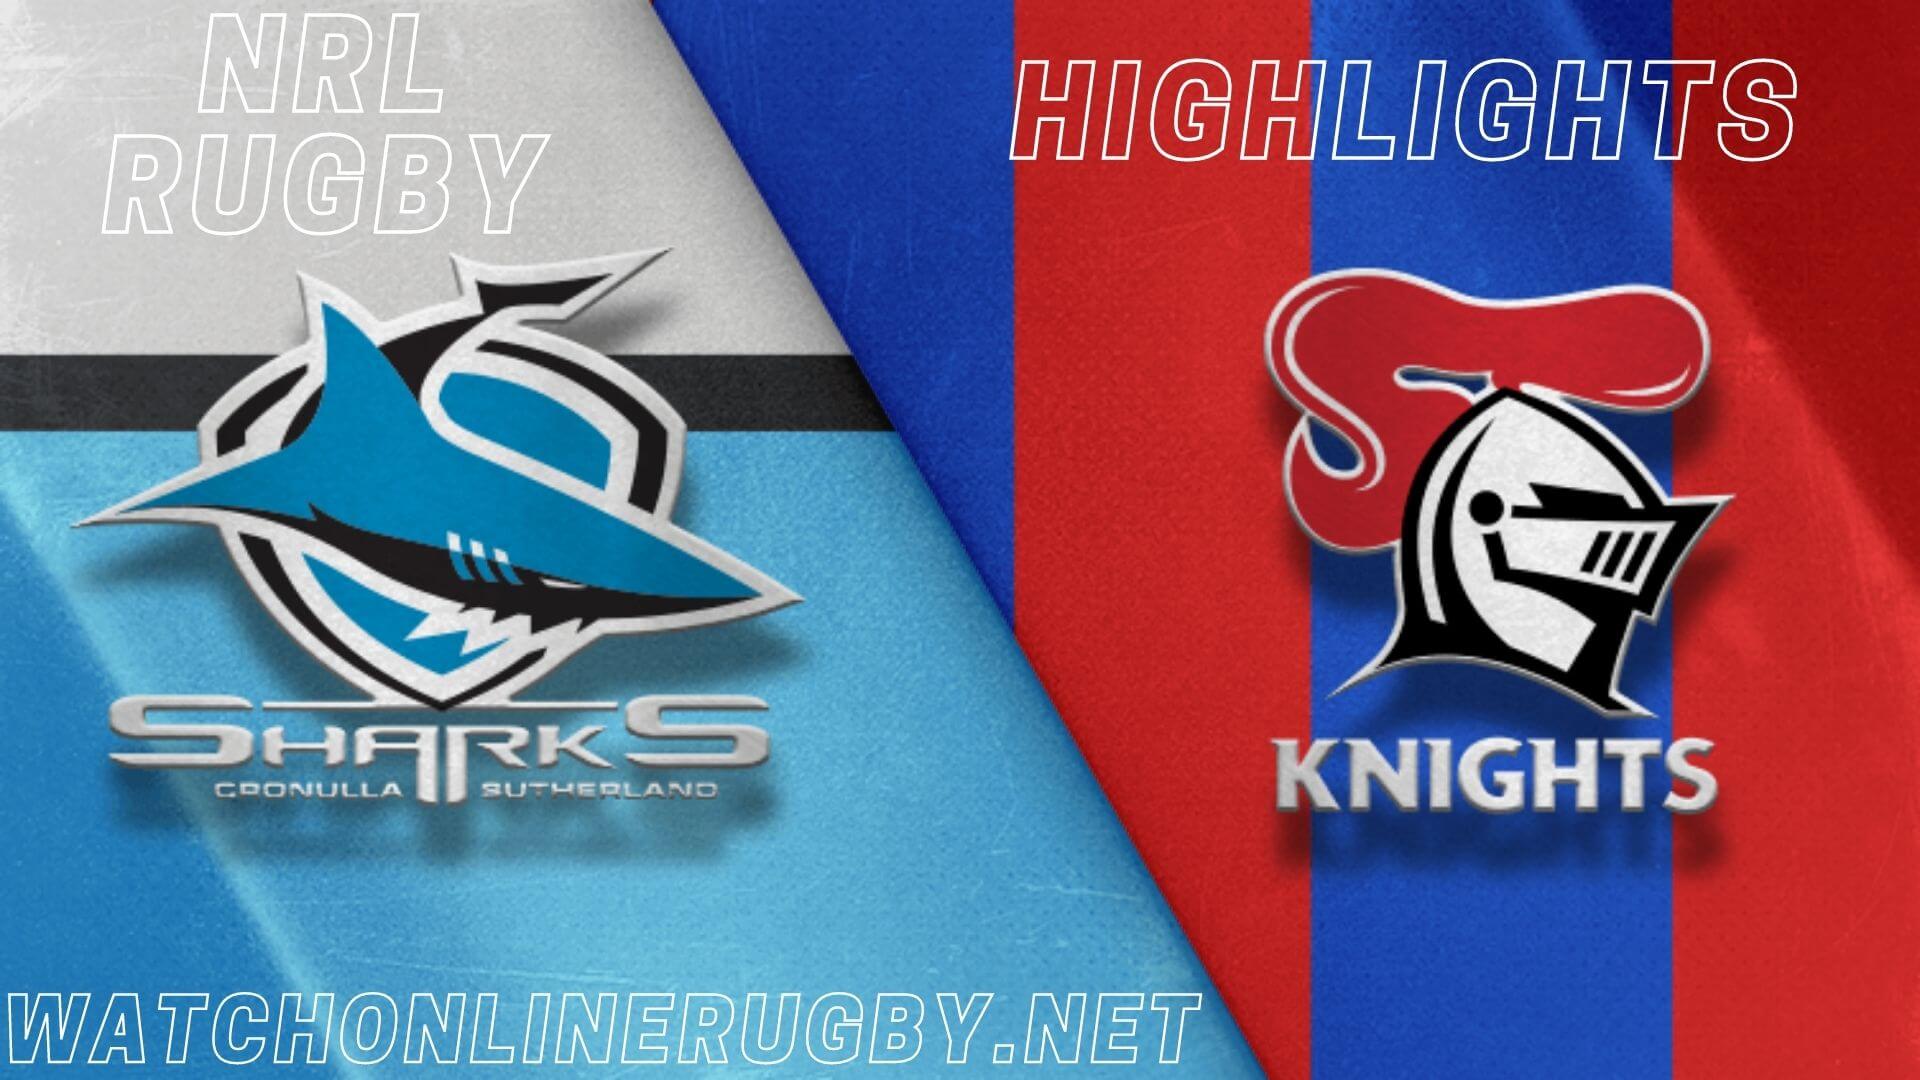 Sharks Vs Knights Highlights RD 4 NRL Rugby